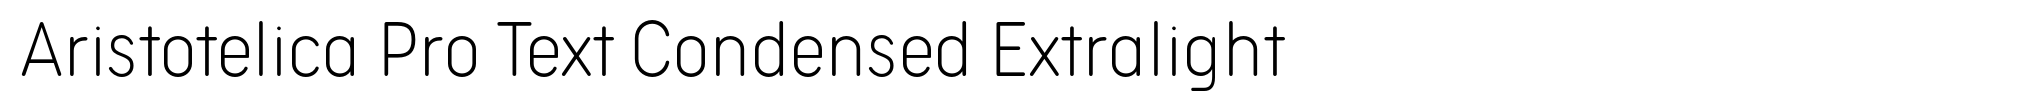 Aristotelica Pro Text Condensed Extralight image